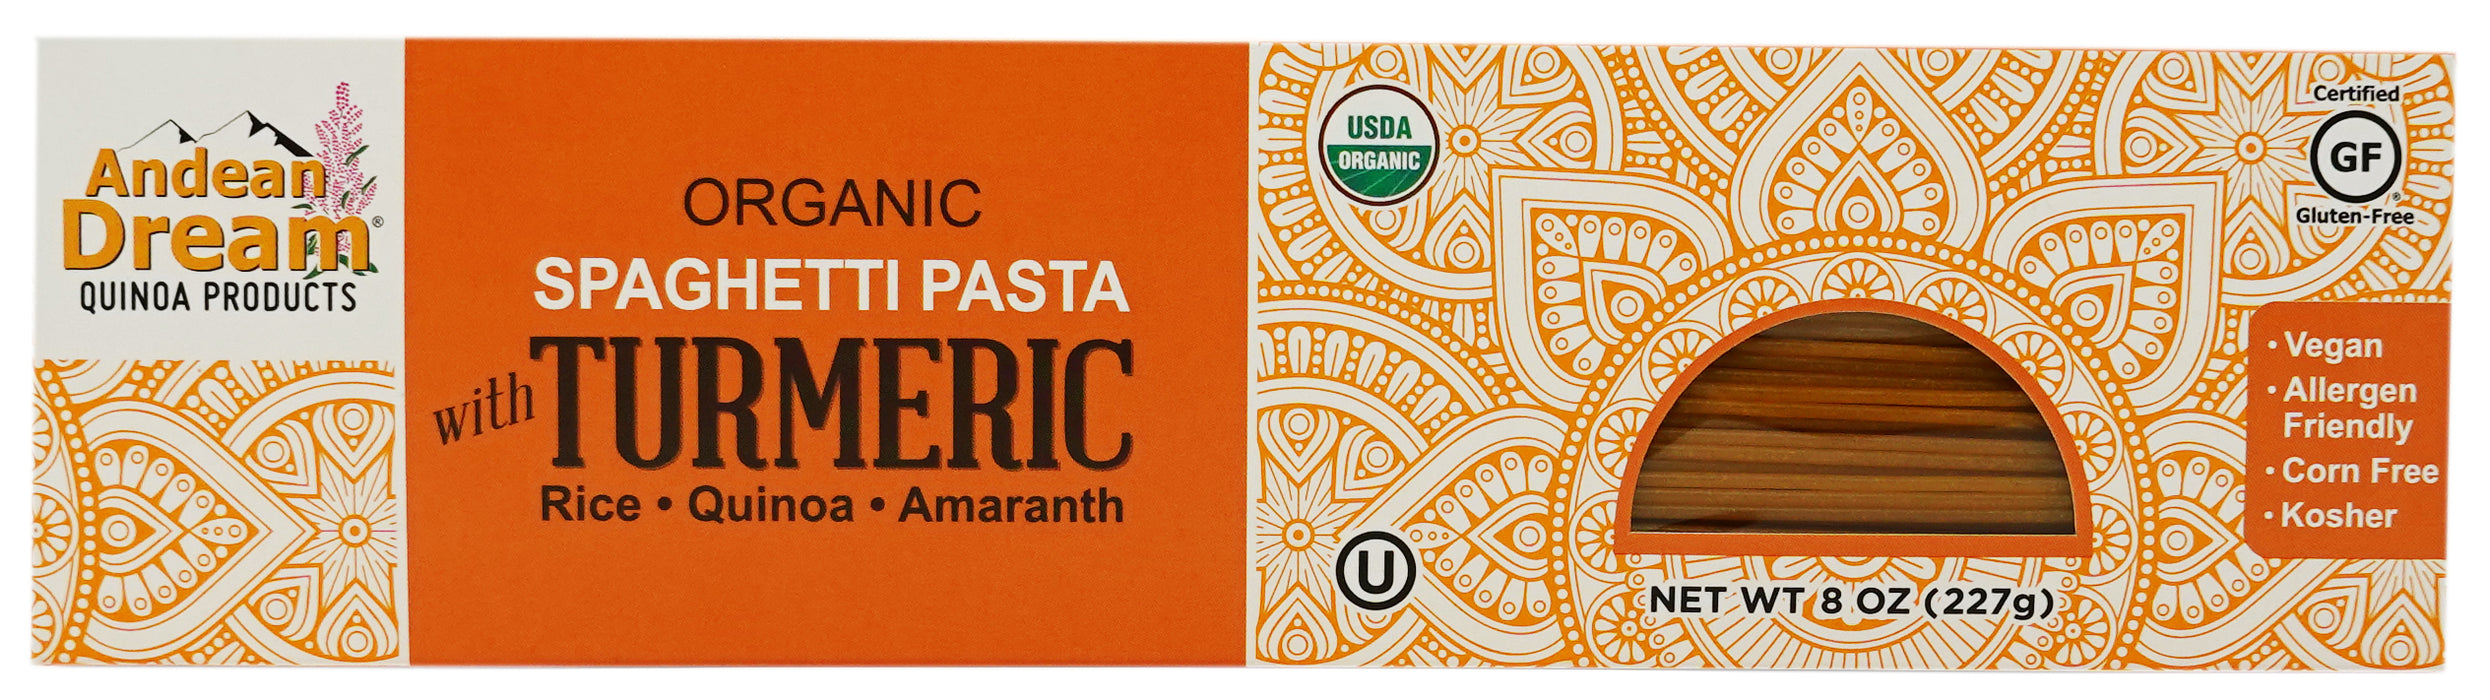 Andean Dream Organic Turmeric Spaghetti Pasta (12 Pack)